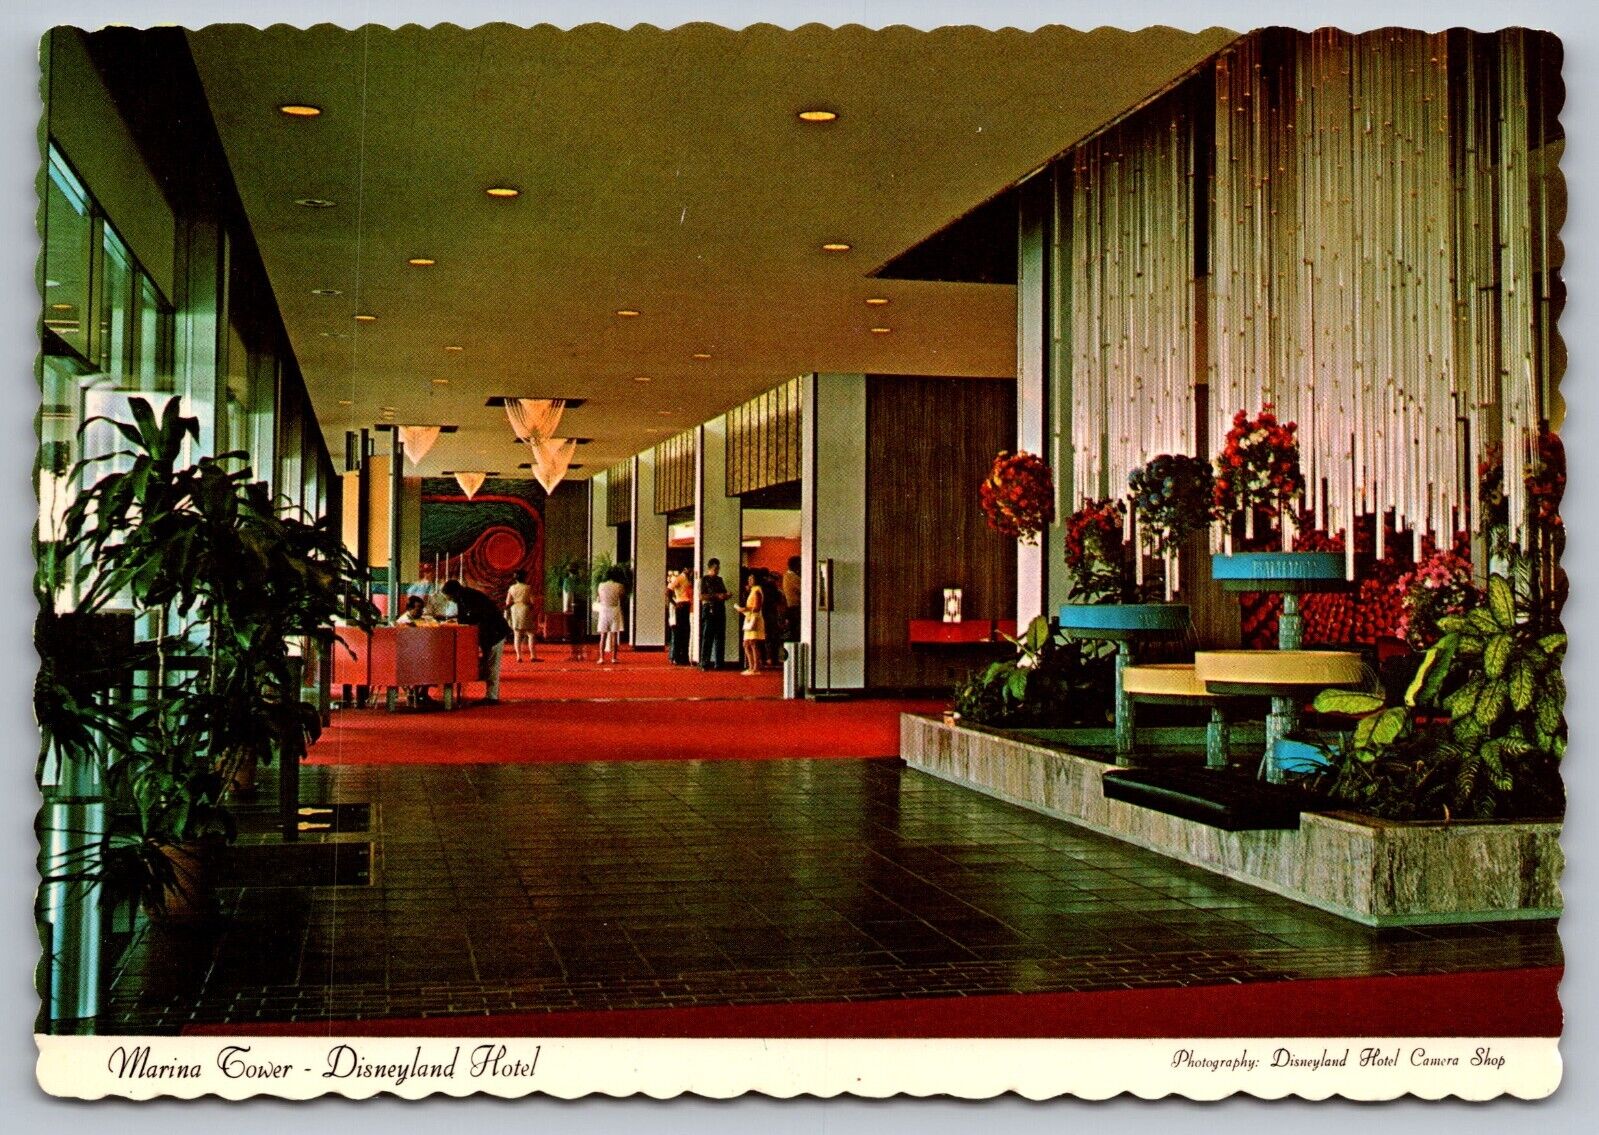 Lobby Interior-Disneyland Hotel Marina Tower-Anaheim CA VTG Postcard (Very Rare)